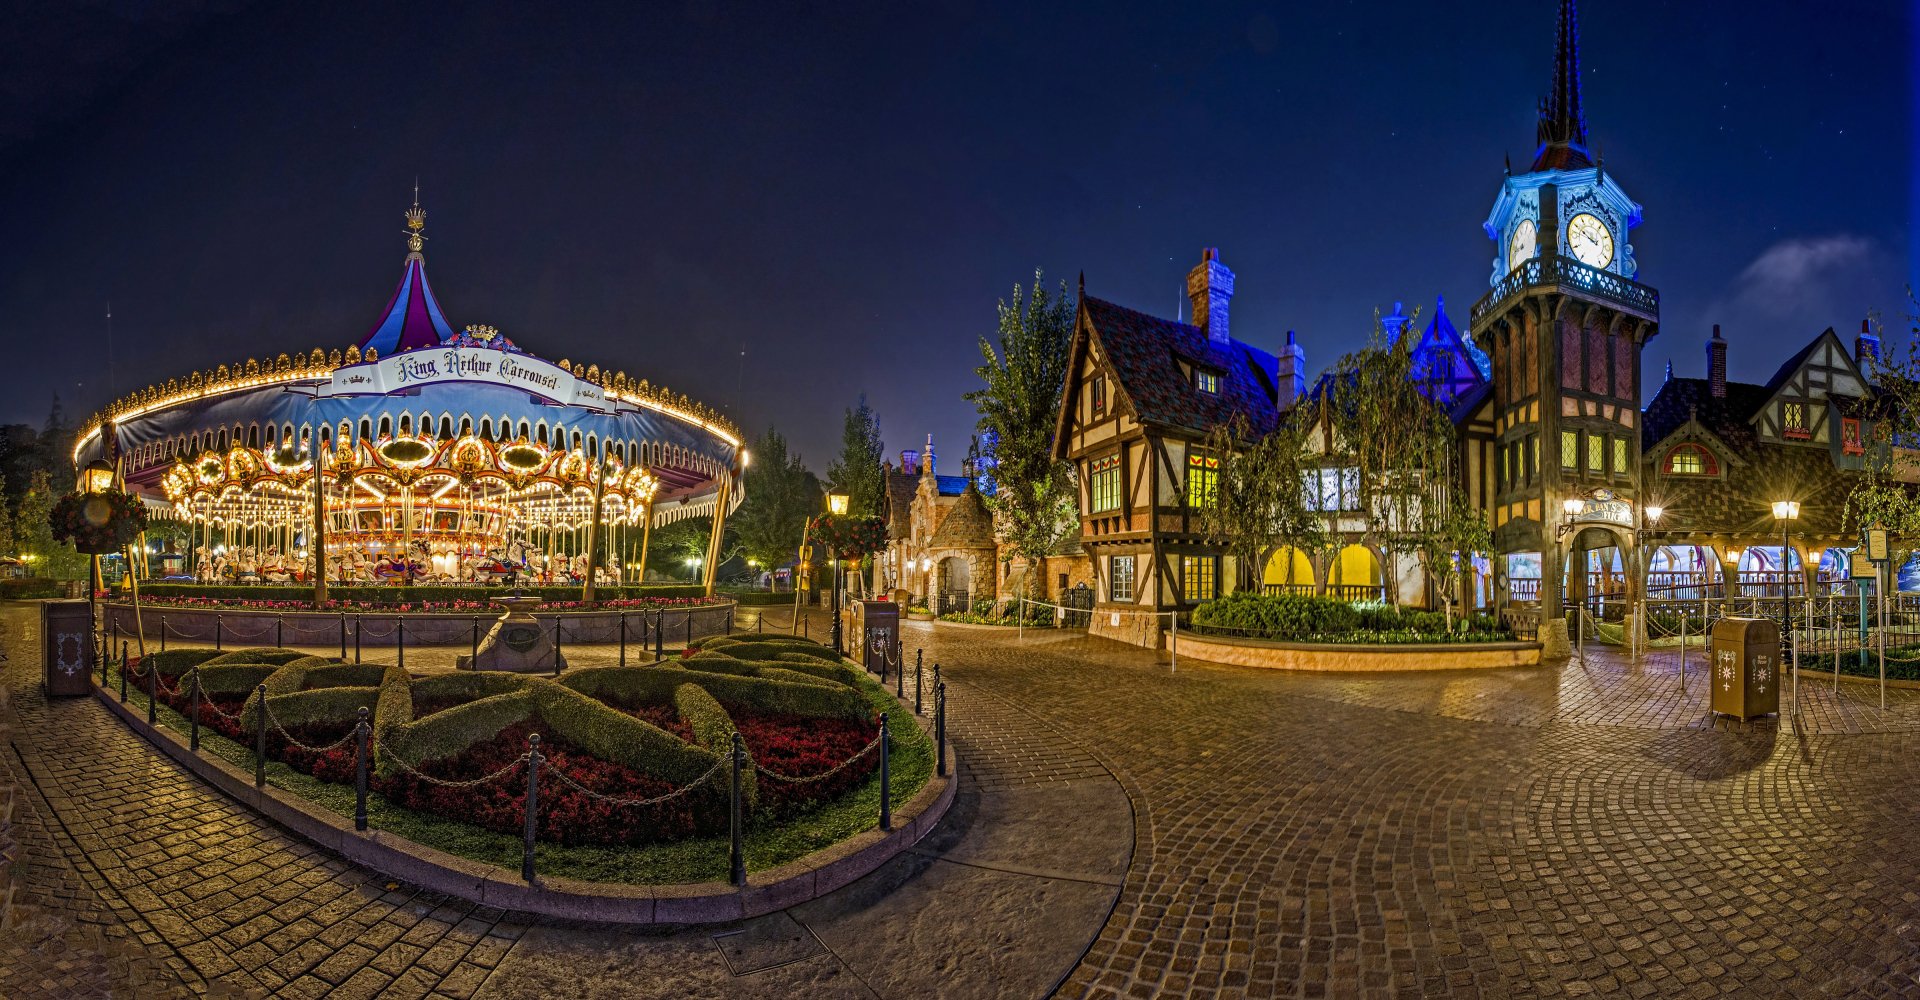 Disneyland 4k Ultra HD Wallpaper | Background Image | 4800x2500 | ID